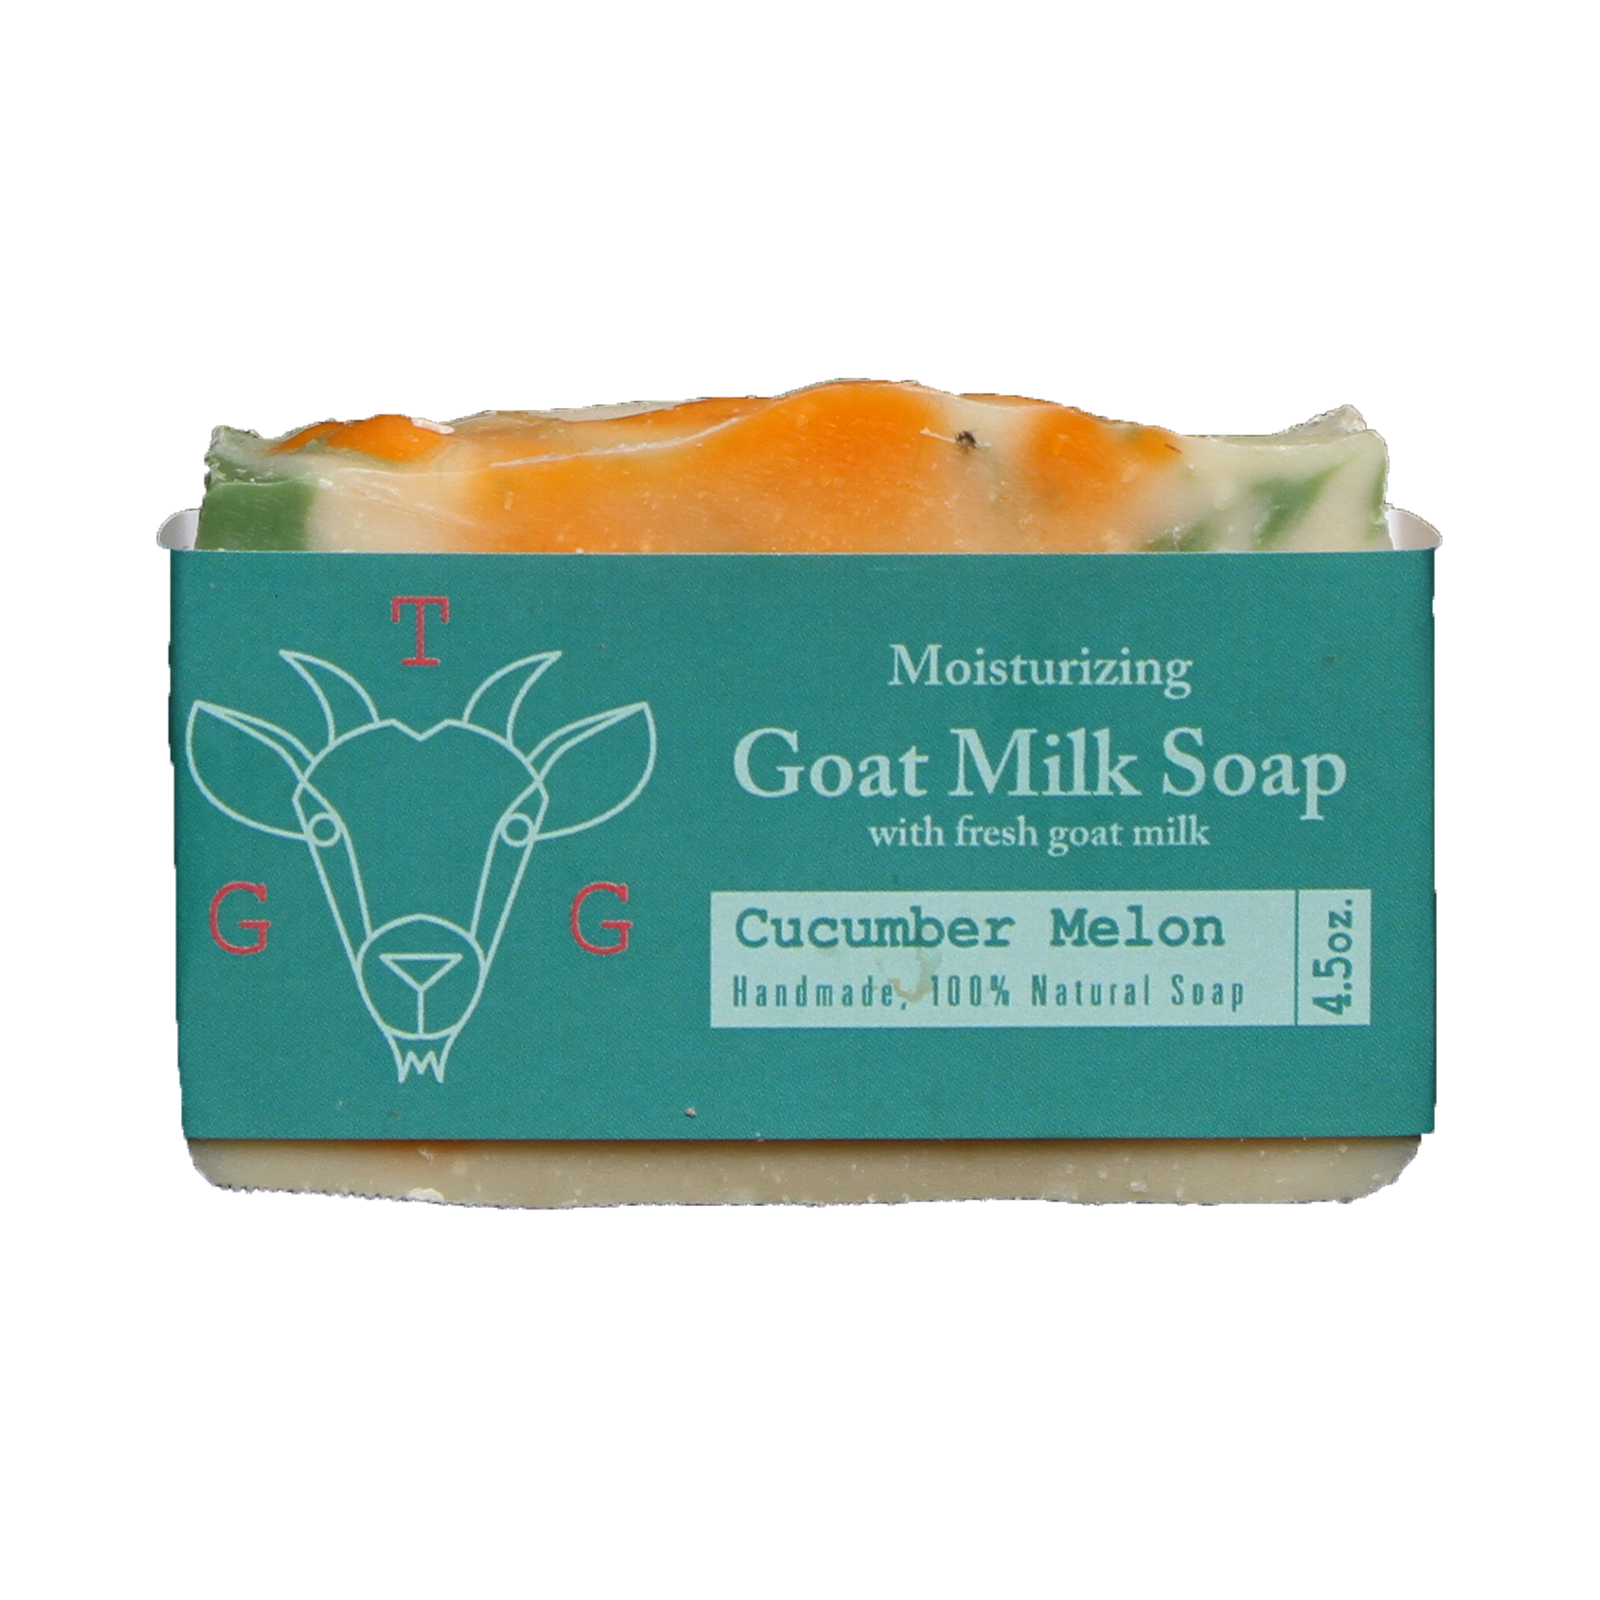 Cucumber Melon goat milk soap